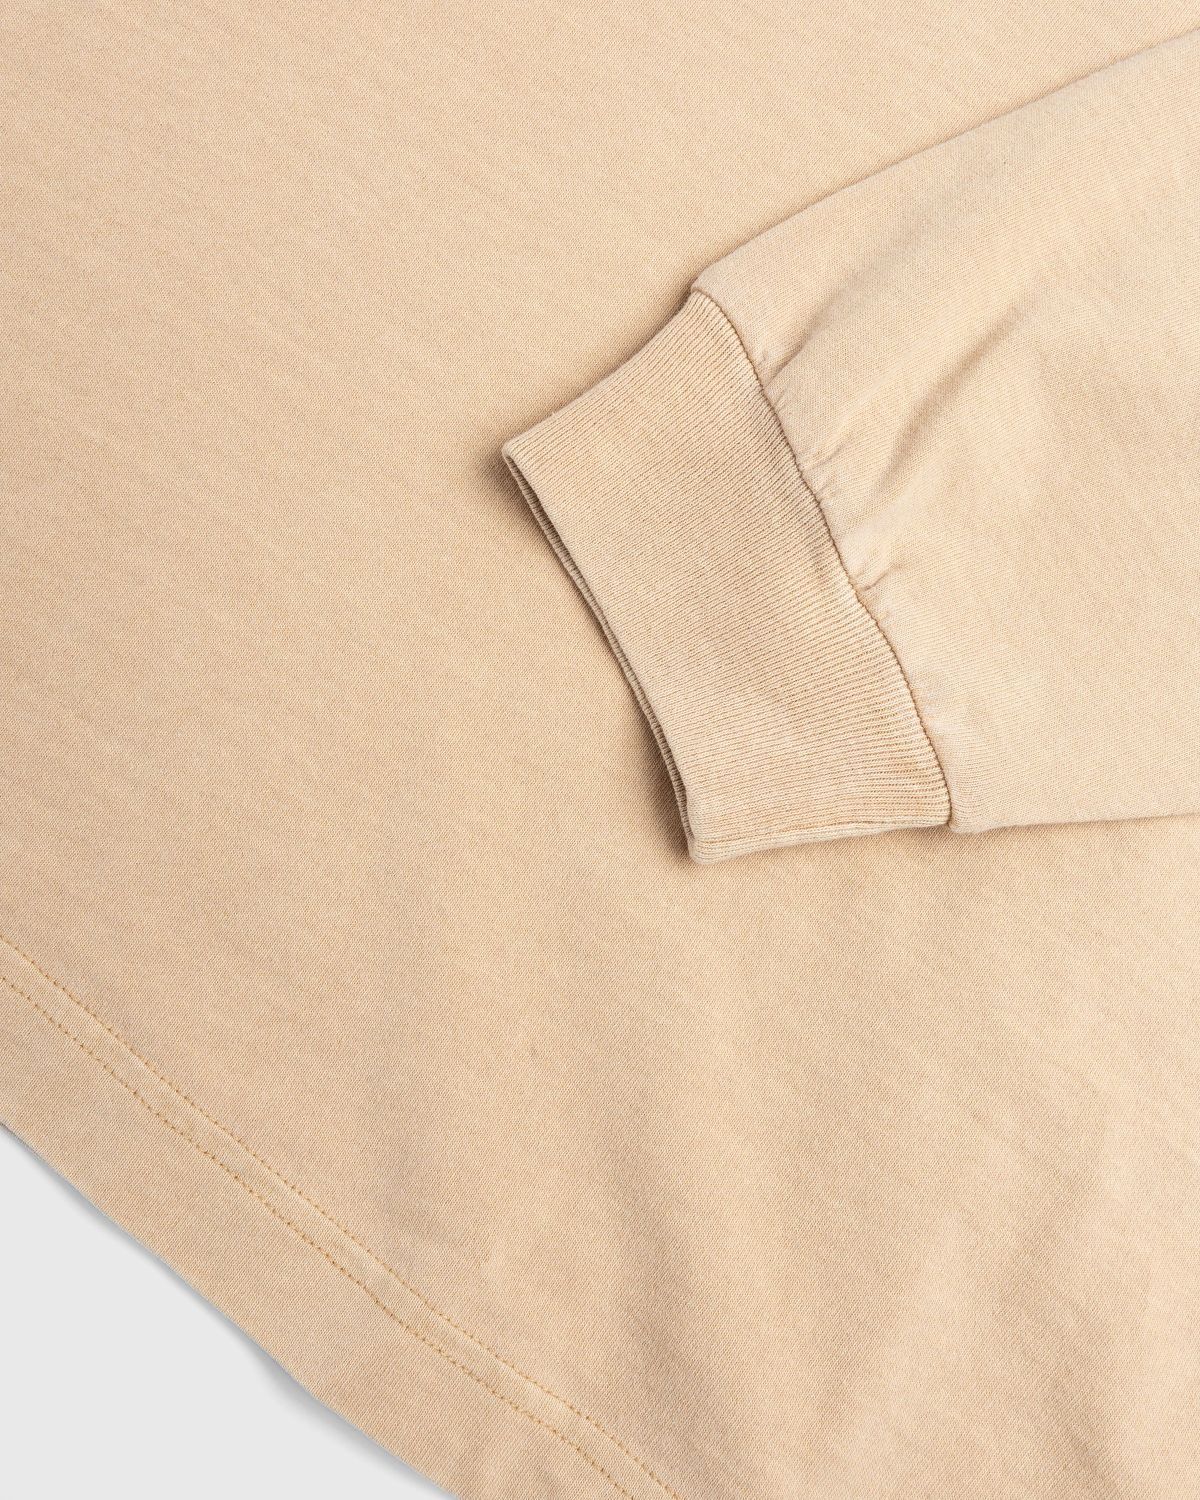 Carhartt WIP – Nelson Longsleeve T-Shirt Garment-Dyed Dusty Hamilton Brown - Tops - Brown - Image 7